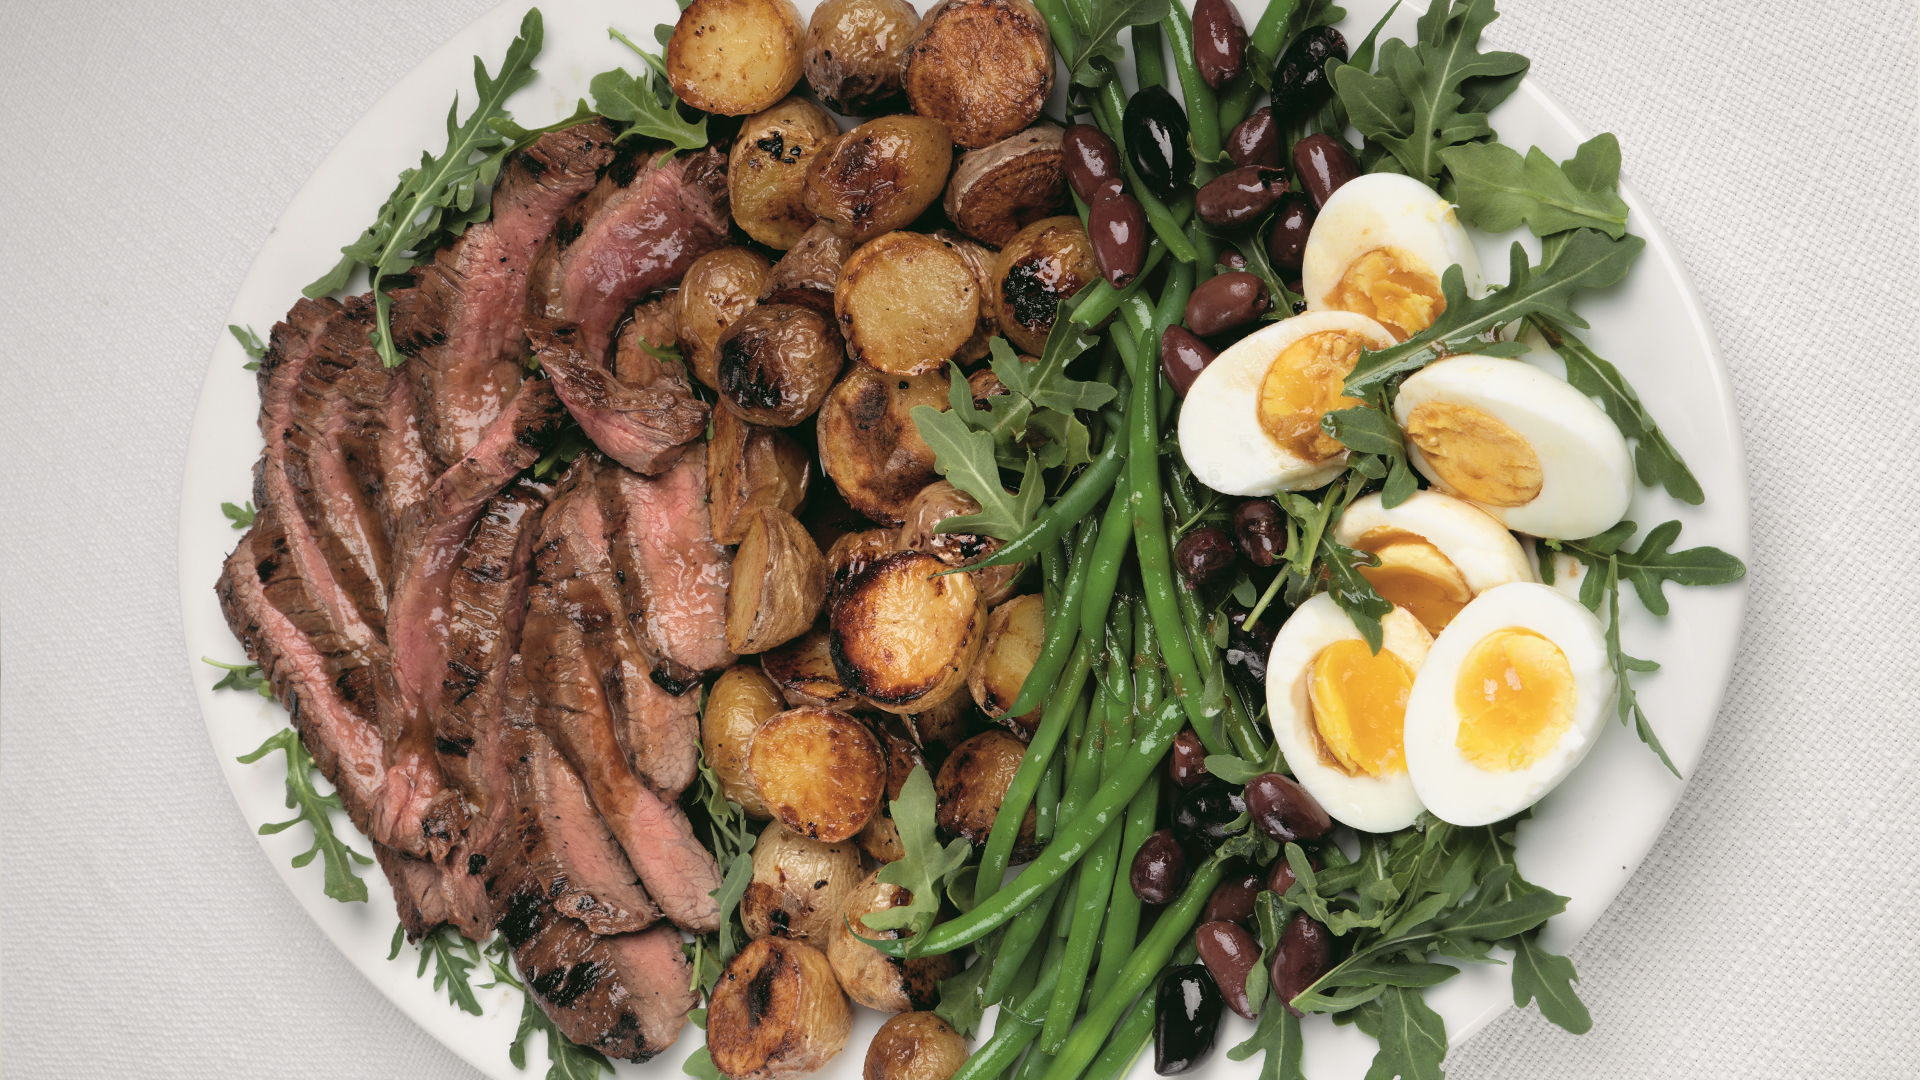 Grilled flank steak and potato salad nicoise